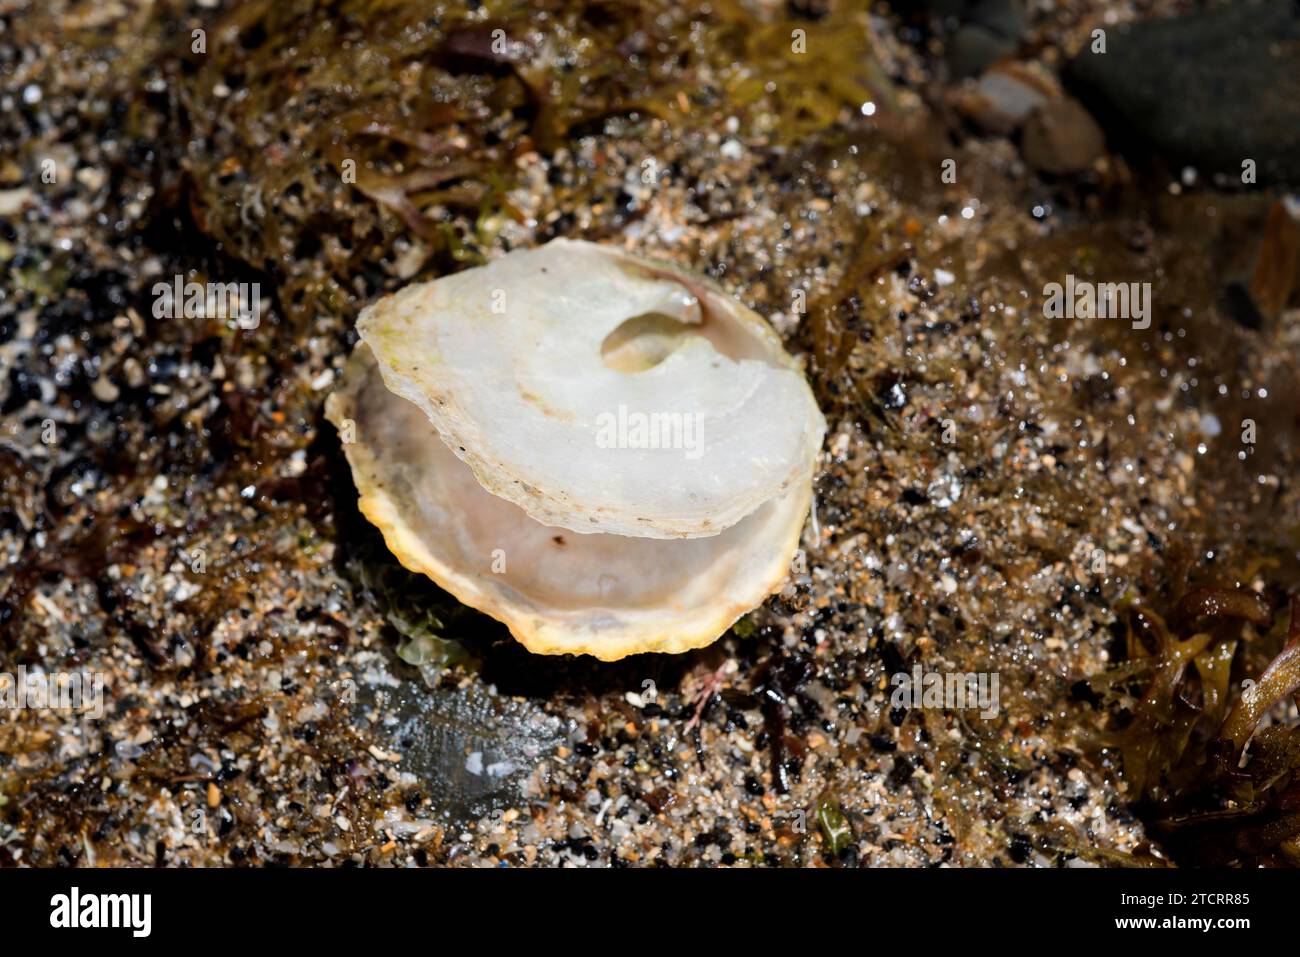 Jingle shell (Anomia ephippium) is a marine bivalve mollusk. This photo was taken in Cap Ras, Girona province, Catalonia, Spain. Stock Photo